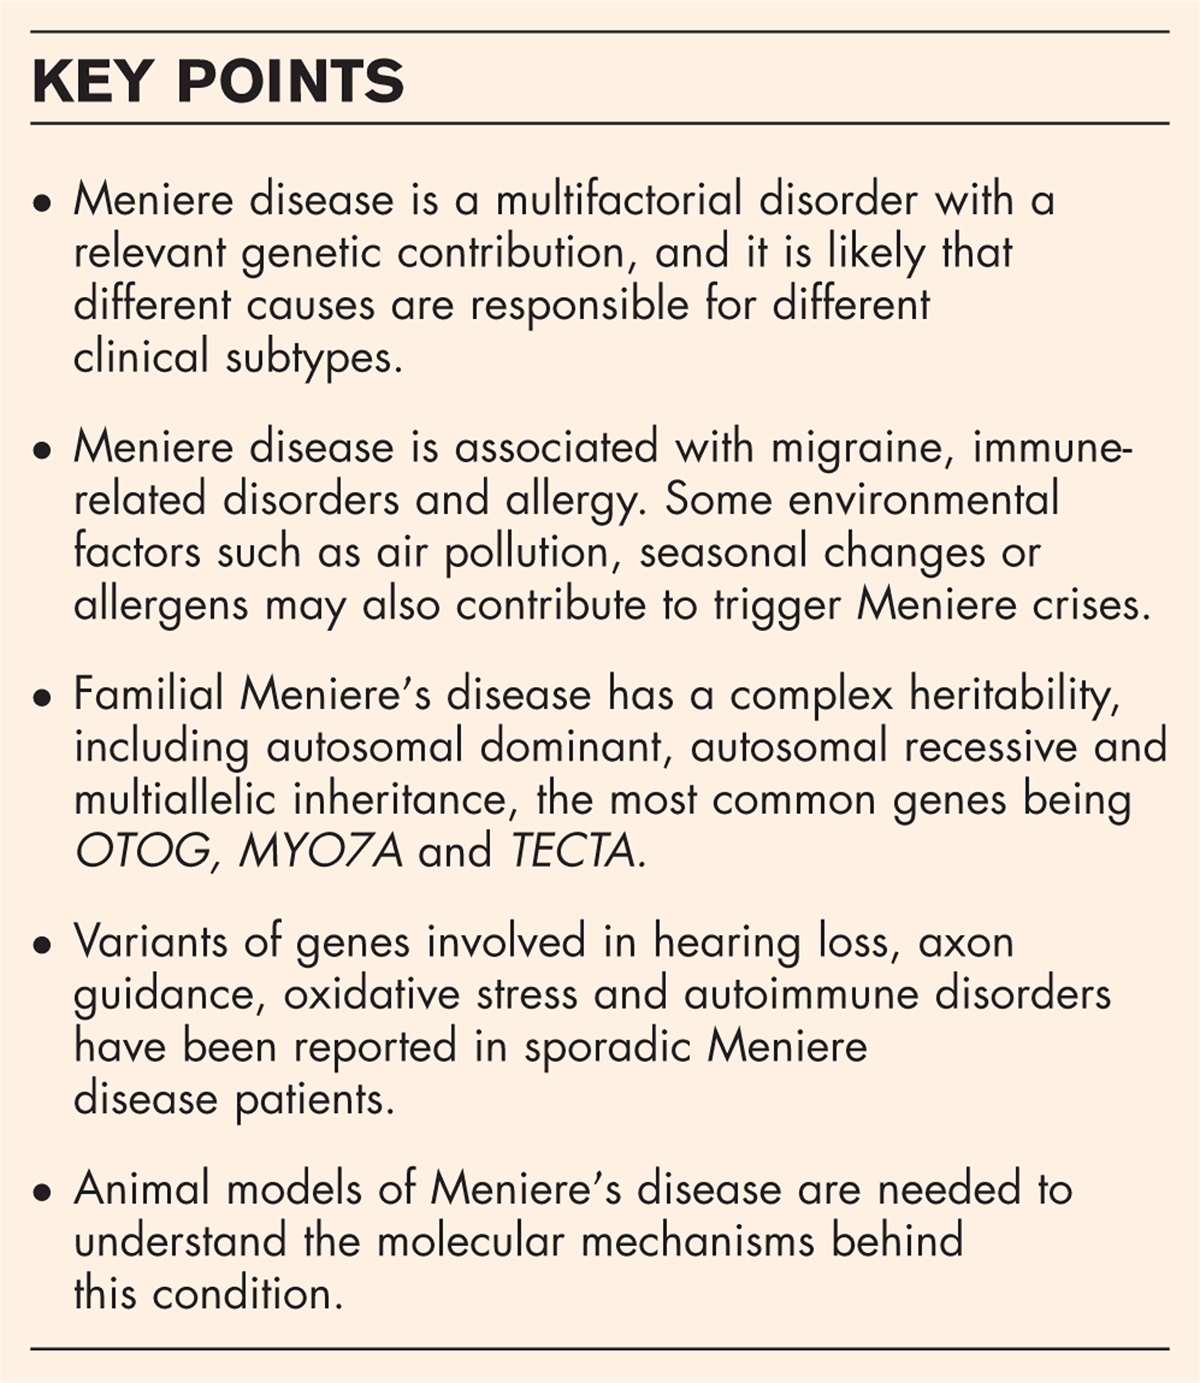 Epidemiology and genetics of Meniere's disease